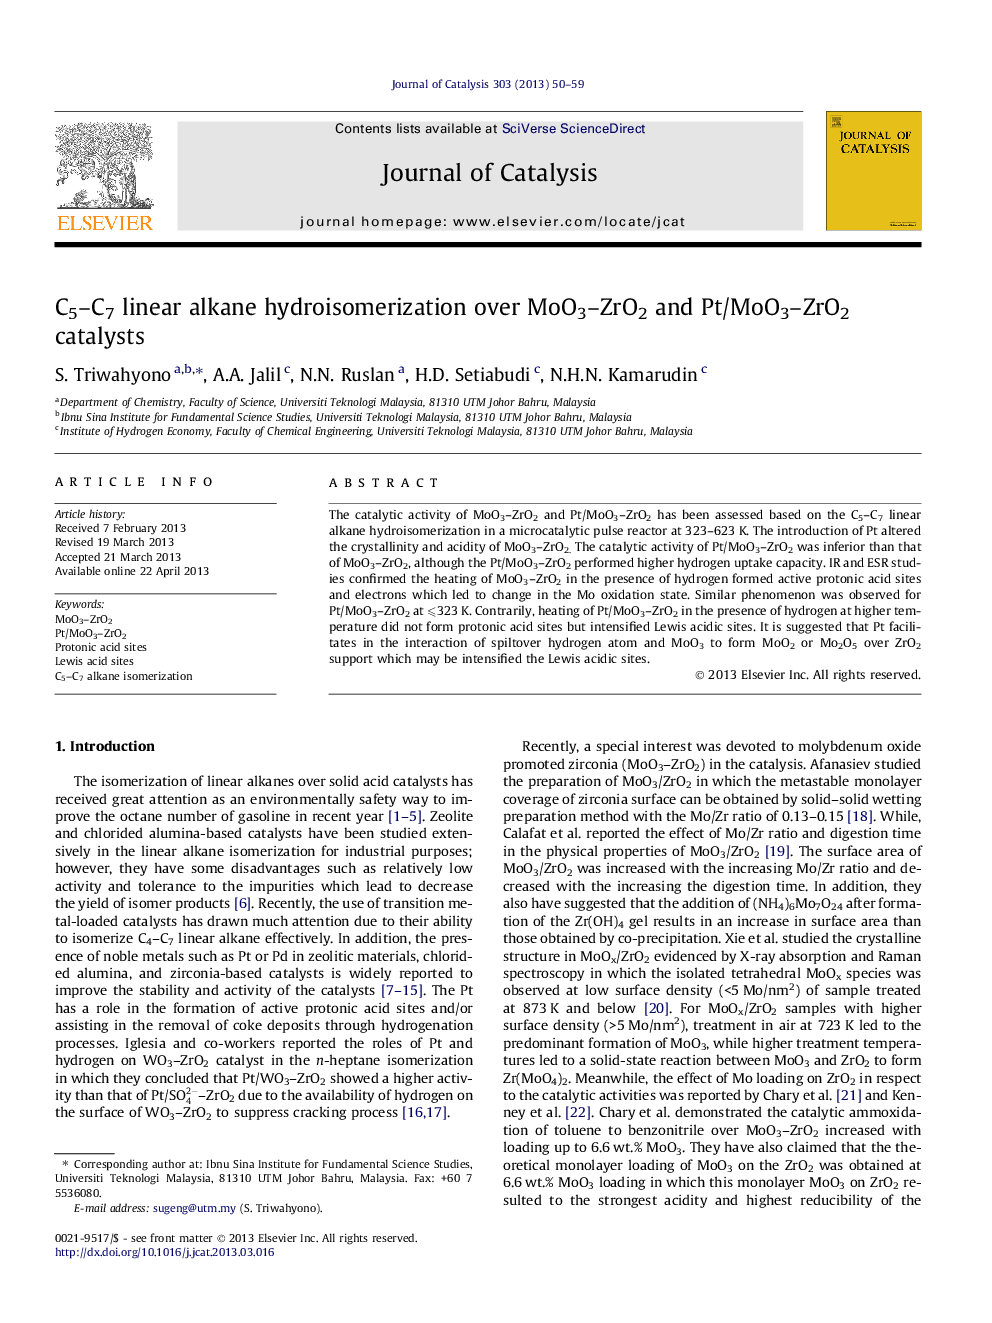 C5–C7 linear alkane hydroisomerization over MoO3–ZrO2 and Pt/MoO3–ZrO2 catalysts